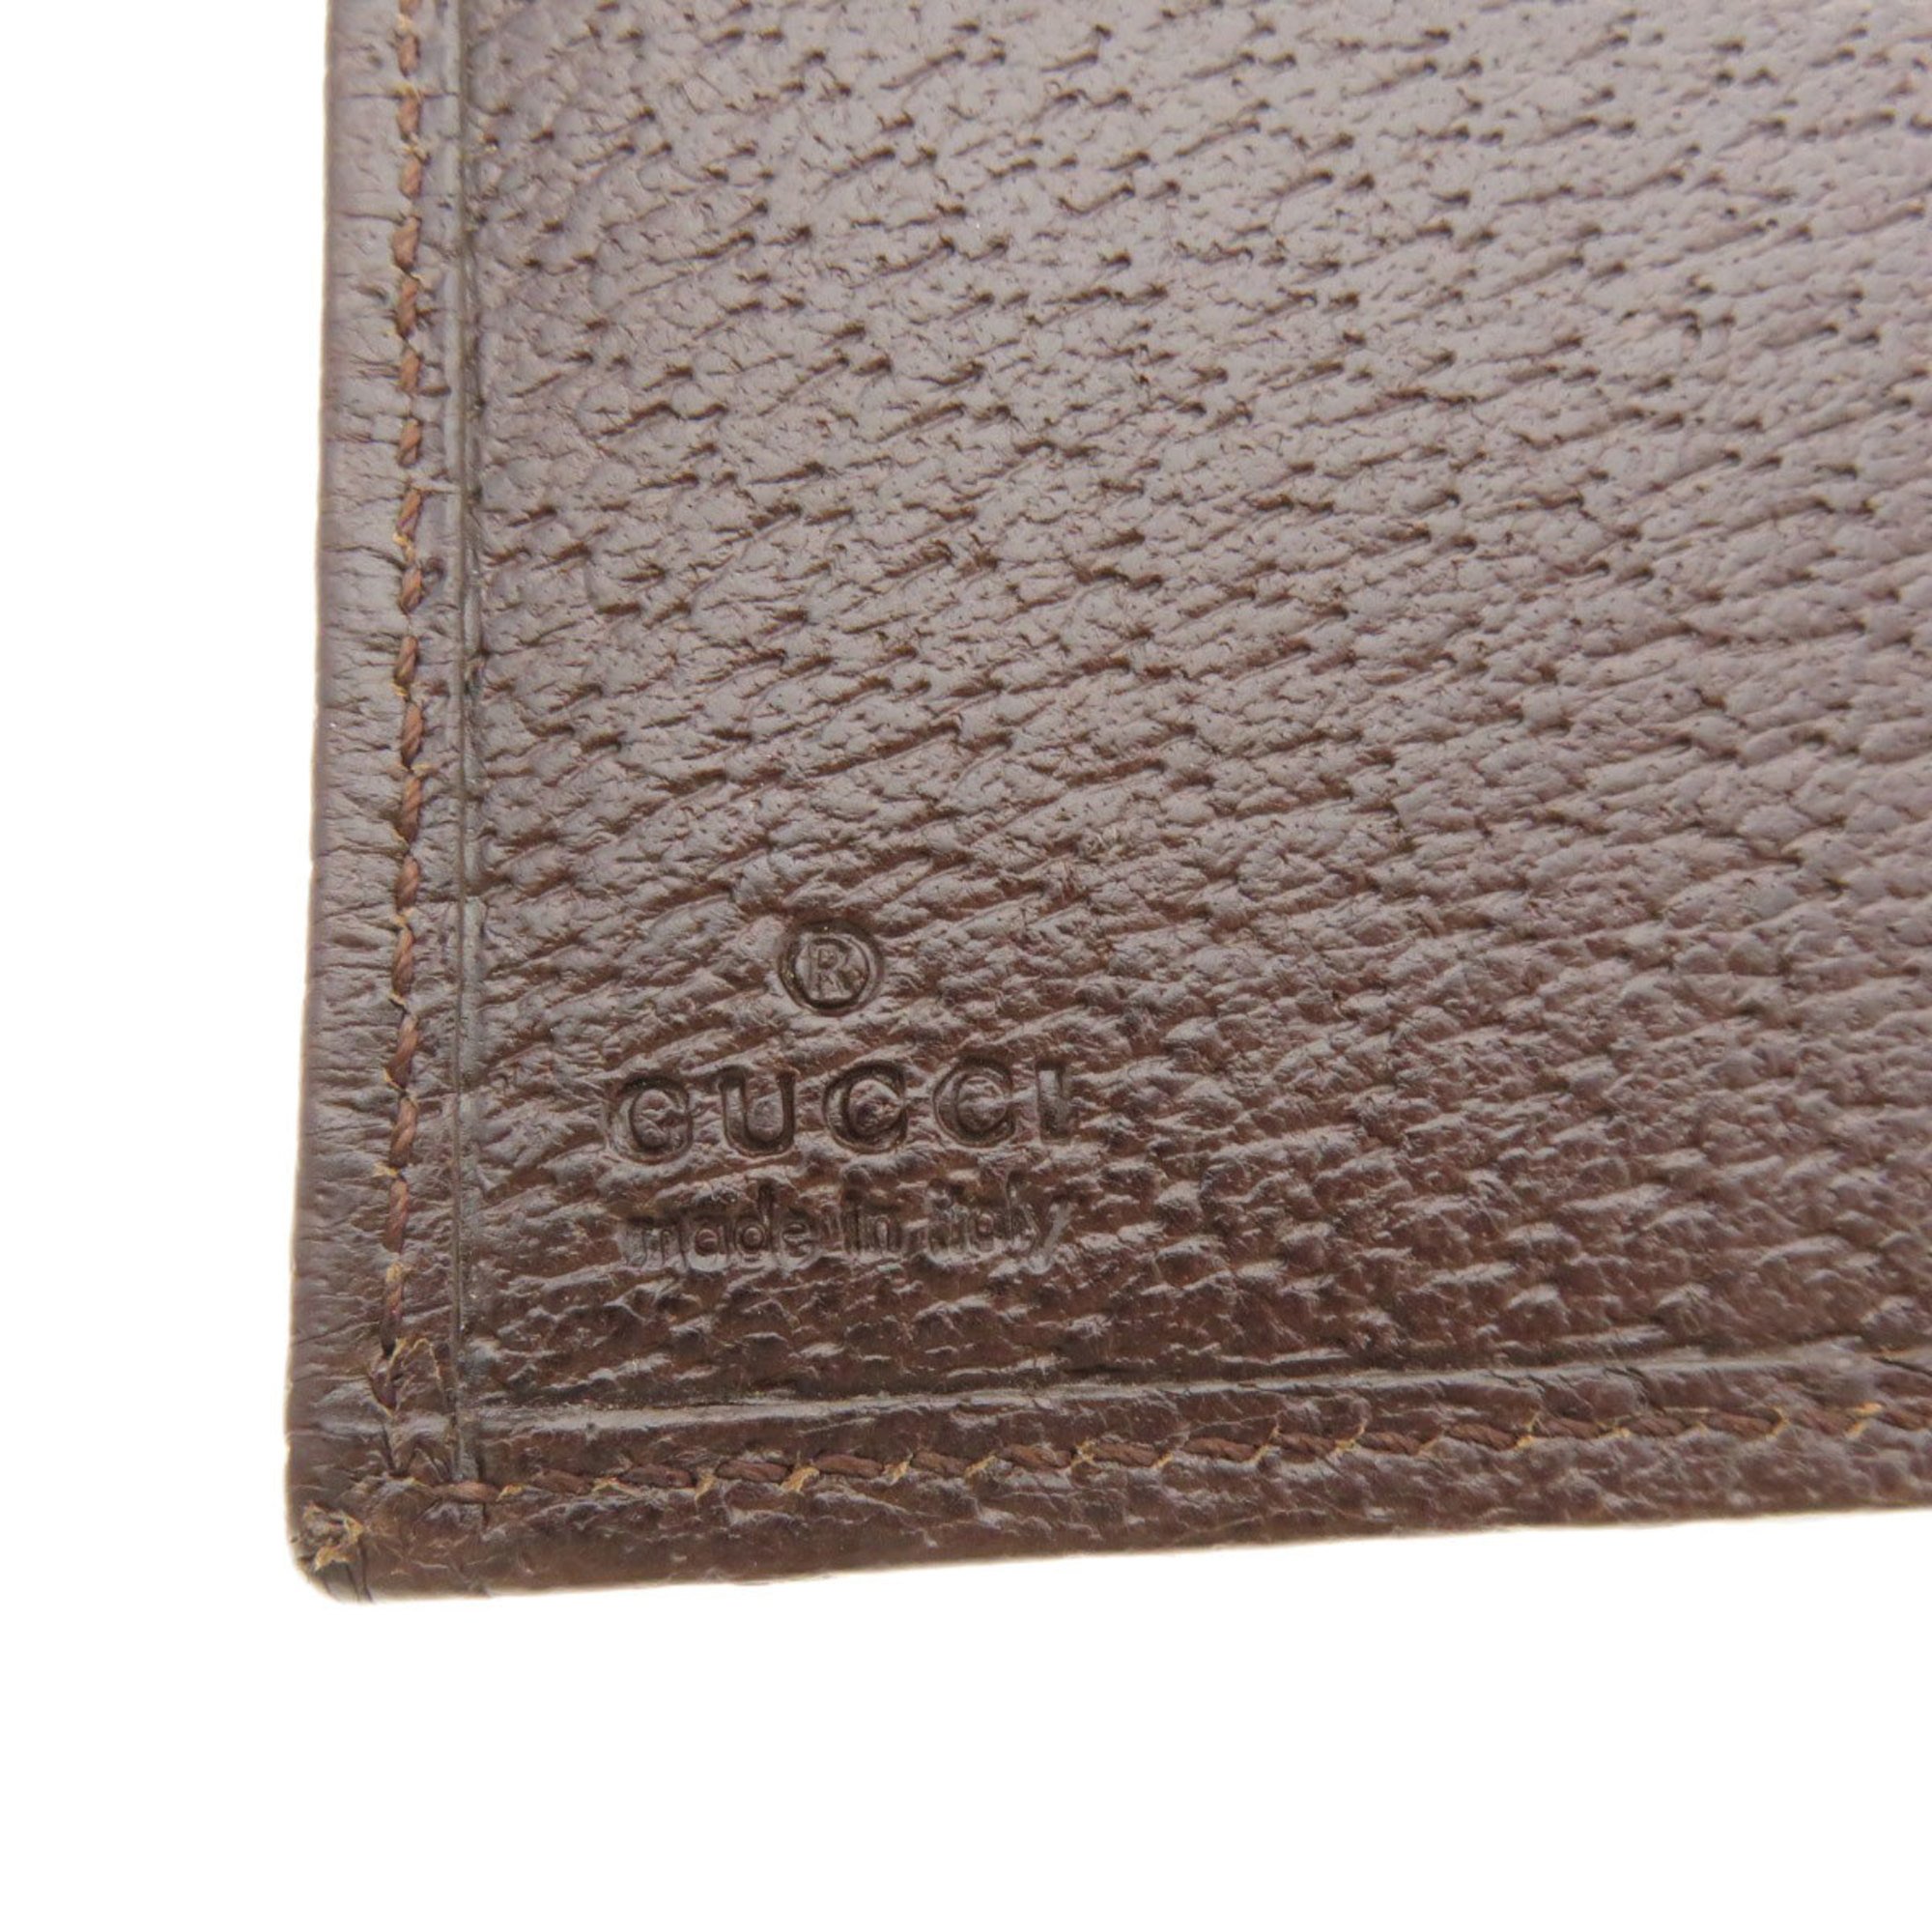 Gucci 154258 GG Bi-fold Wallet Canvas Leather Women's